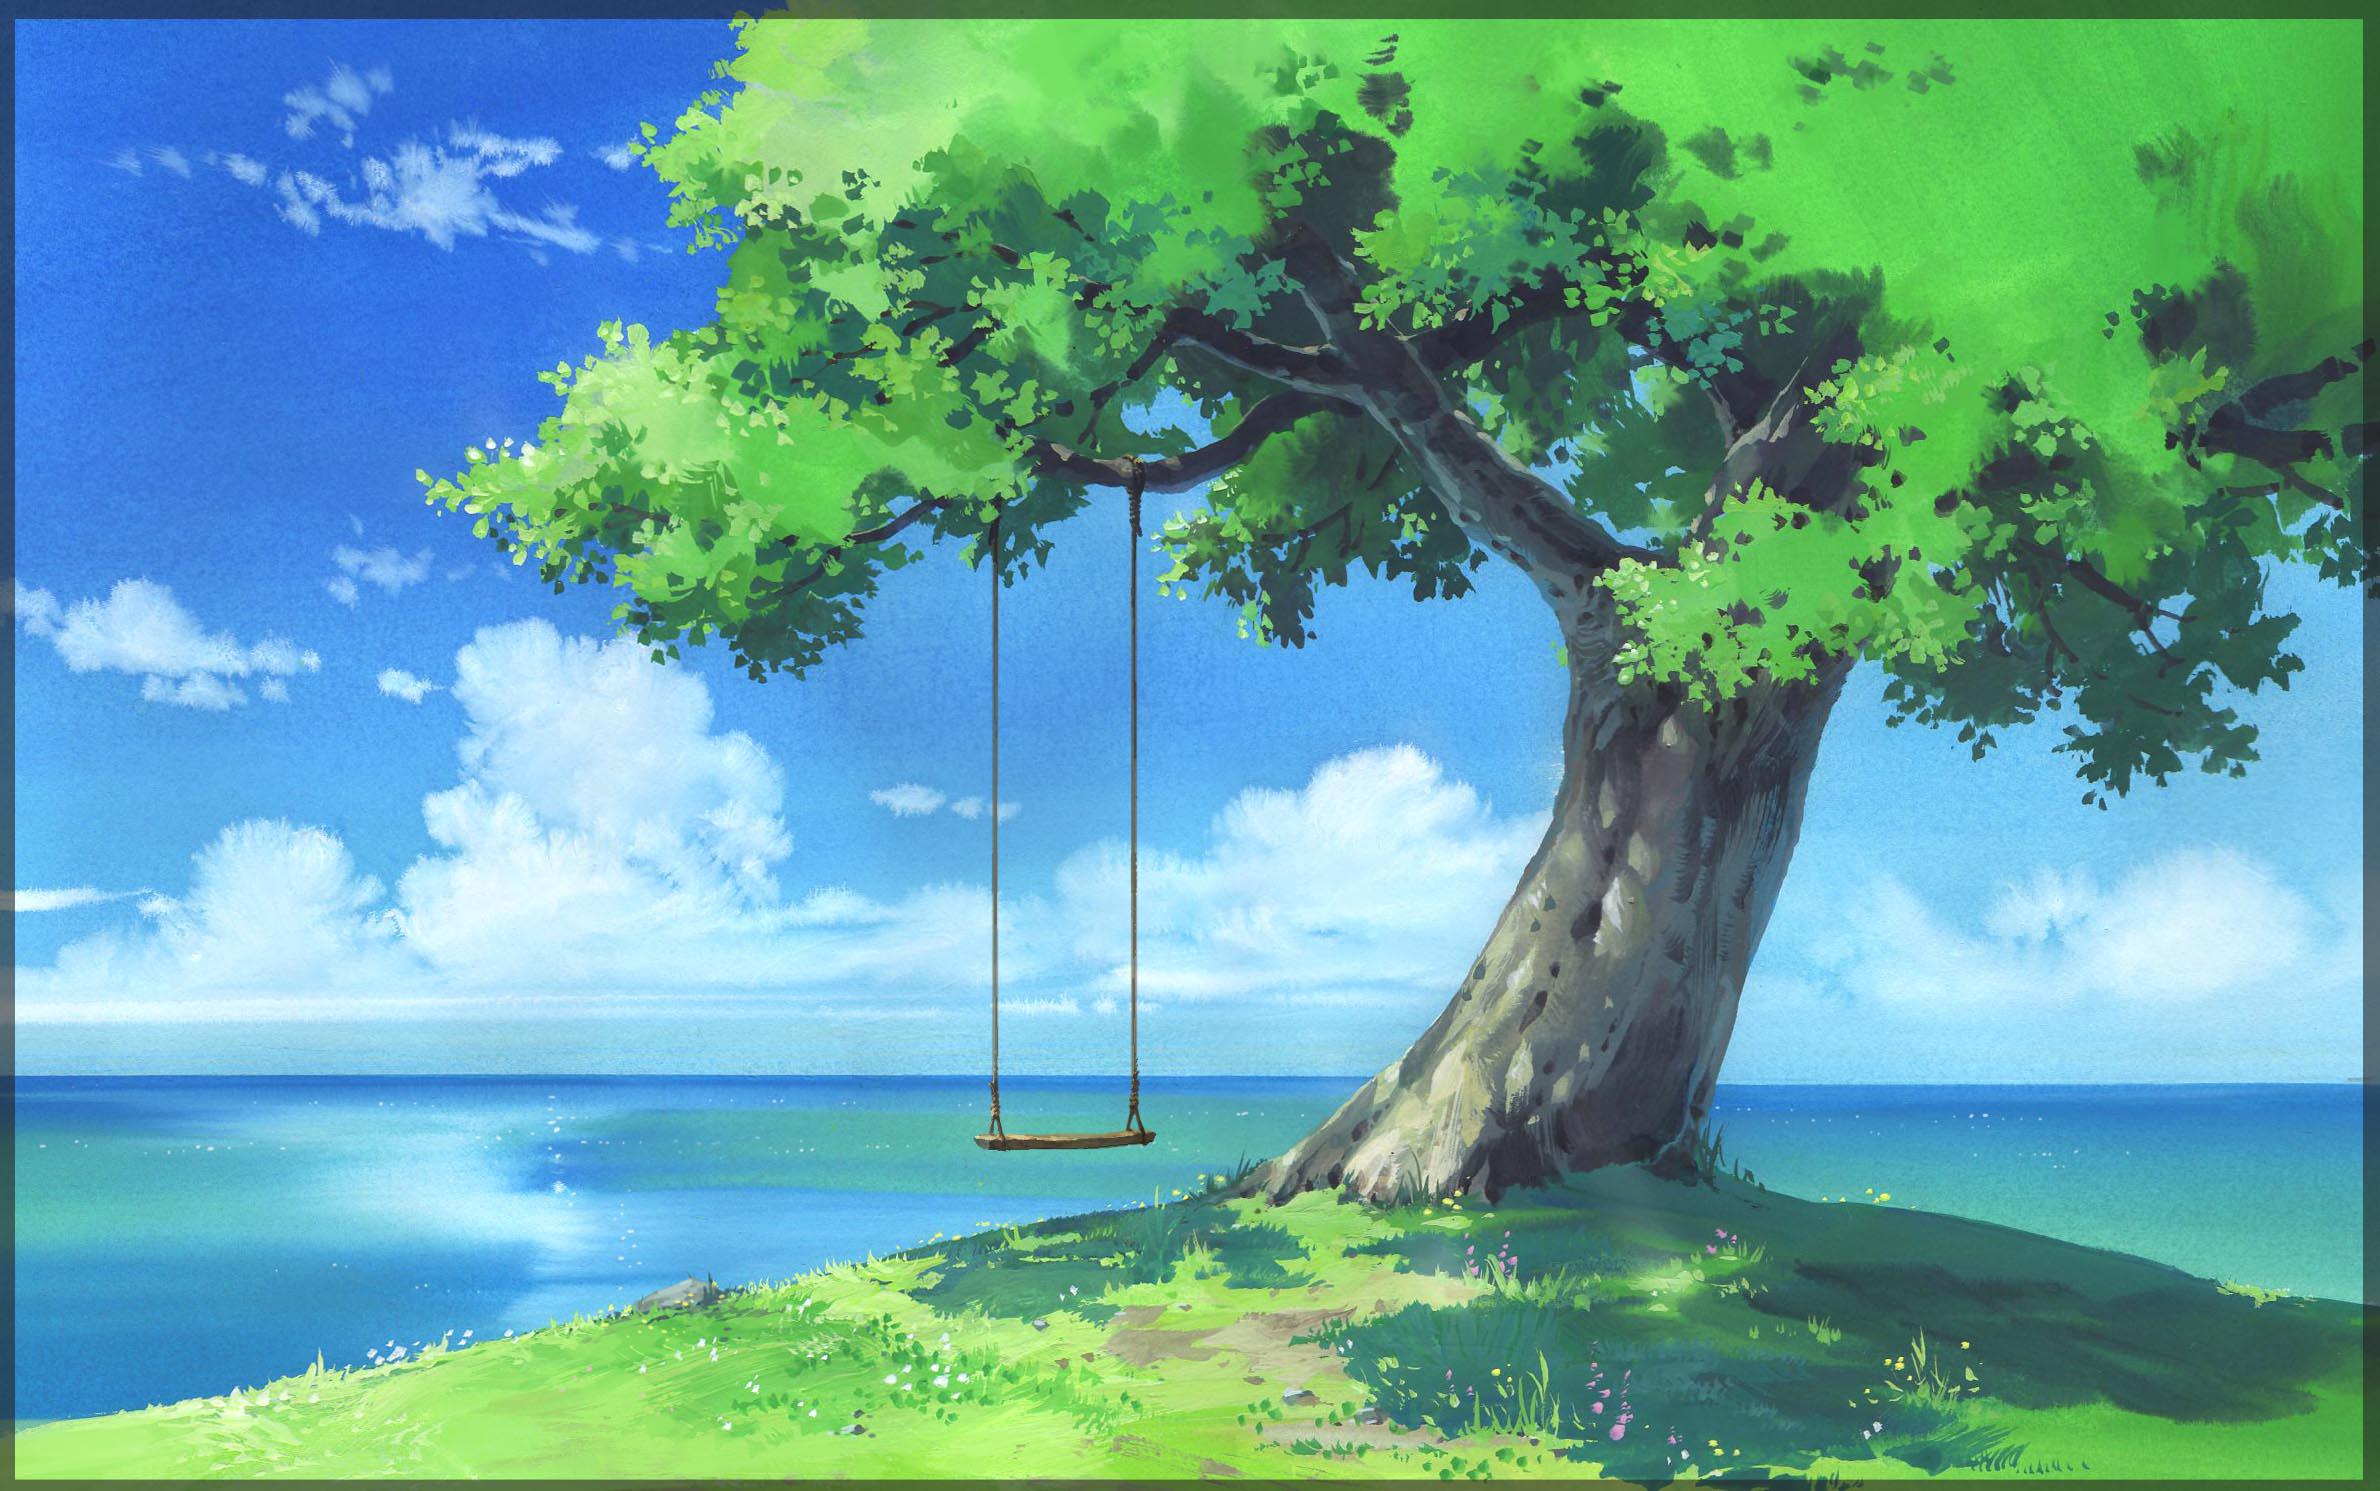 lo-fi ideal calm anime setting that is beautiful